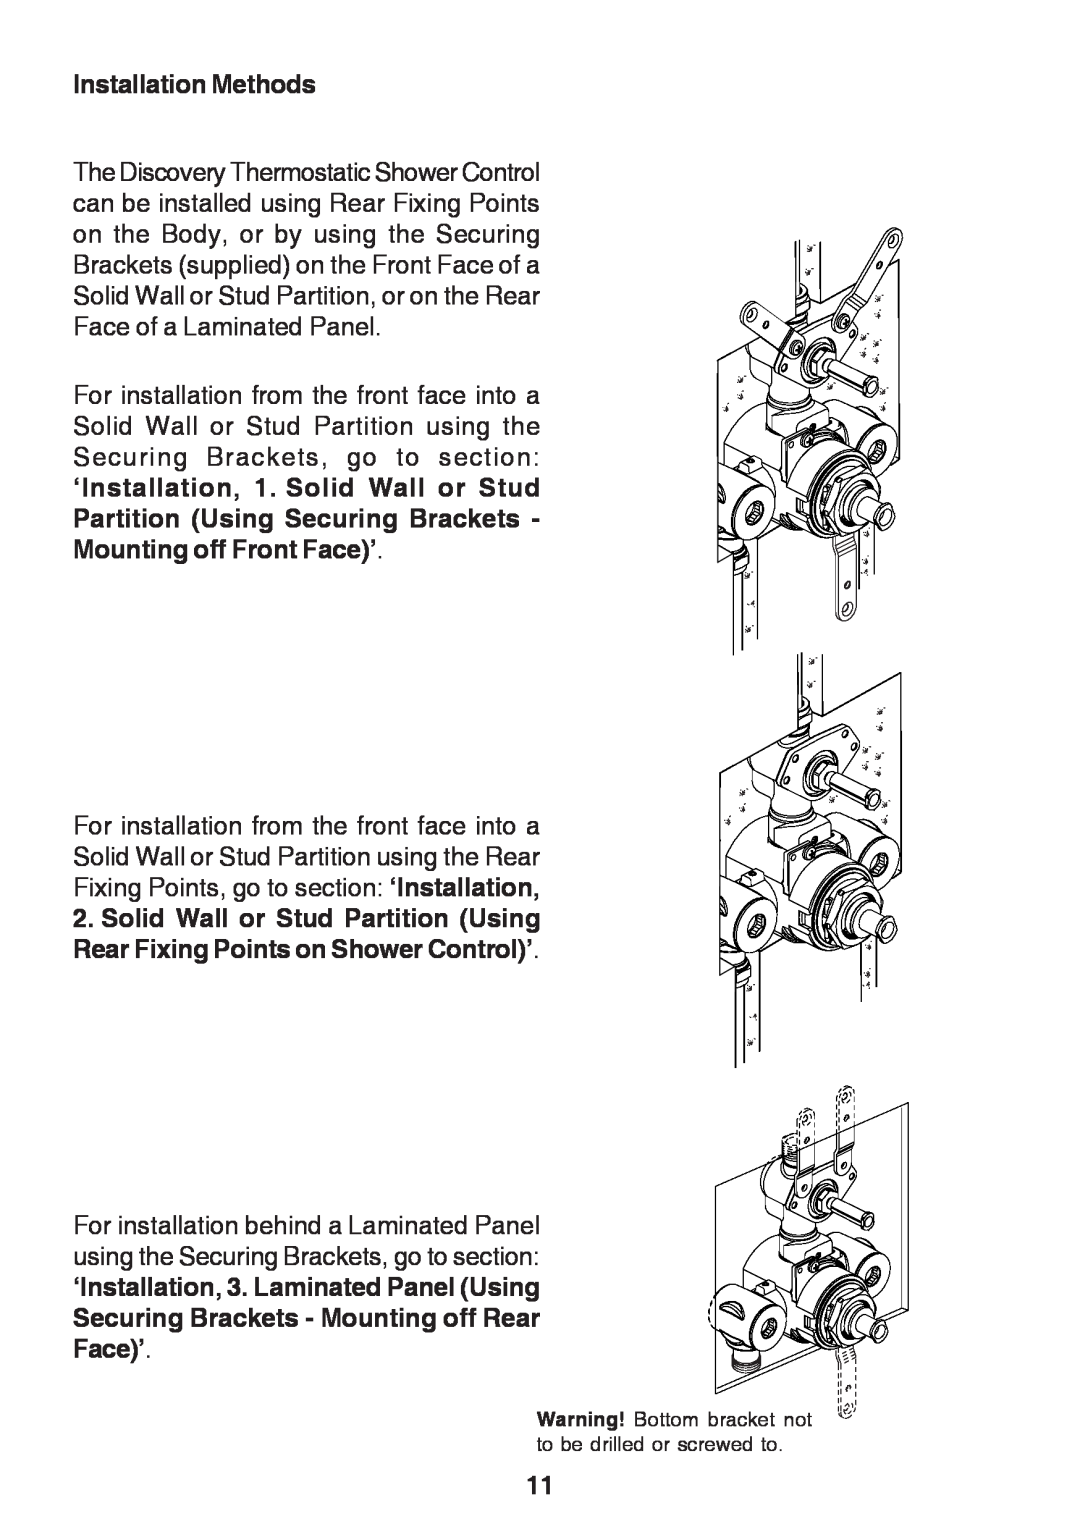 Kohler Discovery manual Installation Methods 